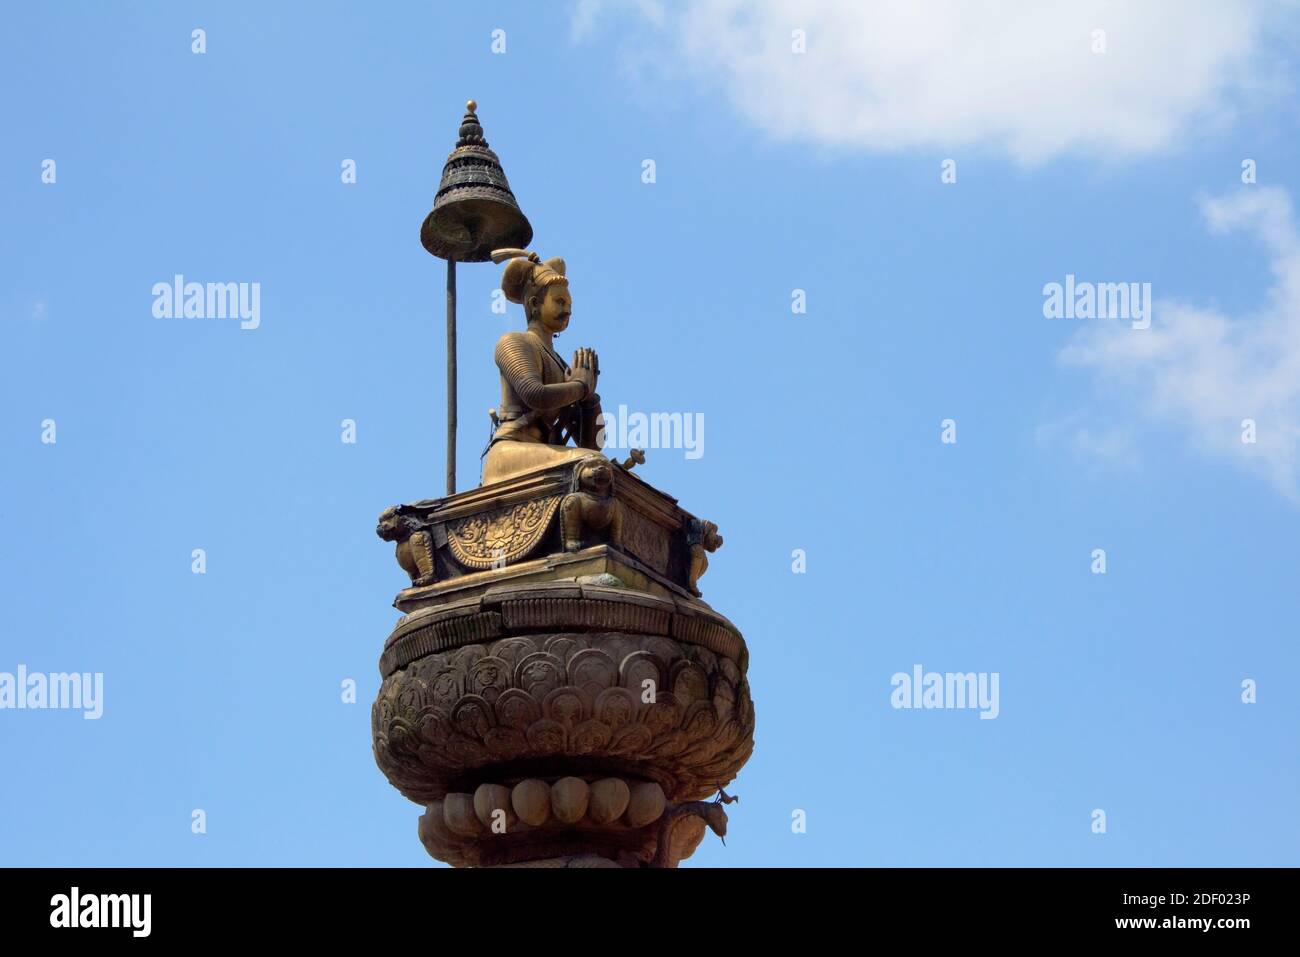 Estatua del rey Bhupatindra malla encaramada en la parte superior de un monolito de piedra, Bhaktapur Durbar Square, Patrimonio de la Humanidad de la UNESCO, Bhaktapur, Nepal Foto de stock